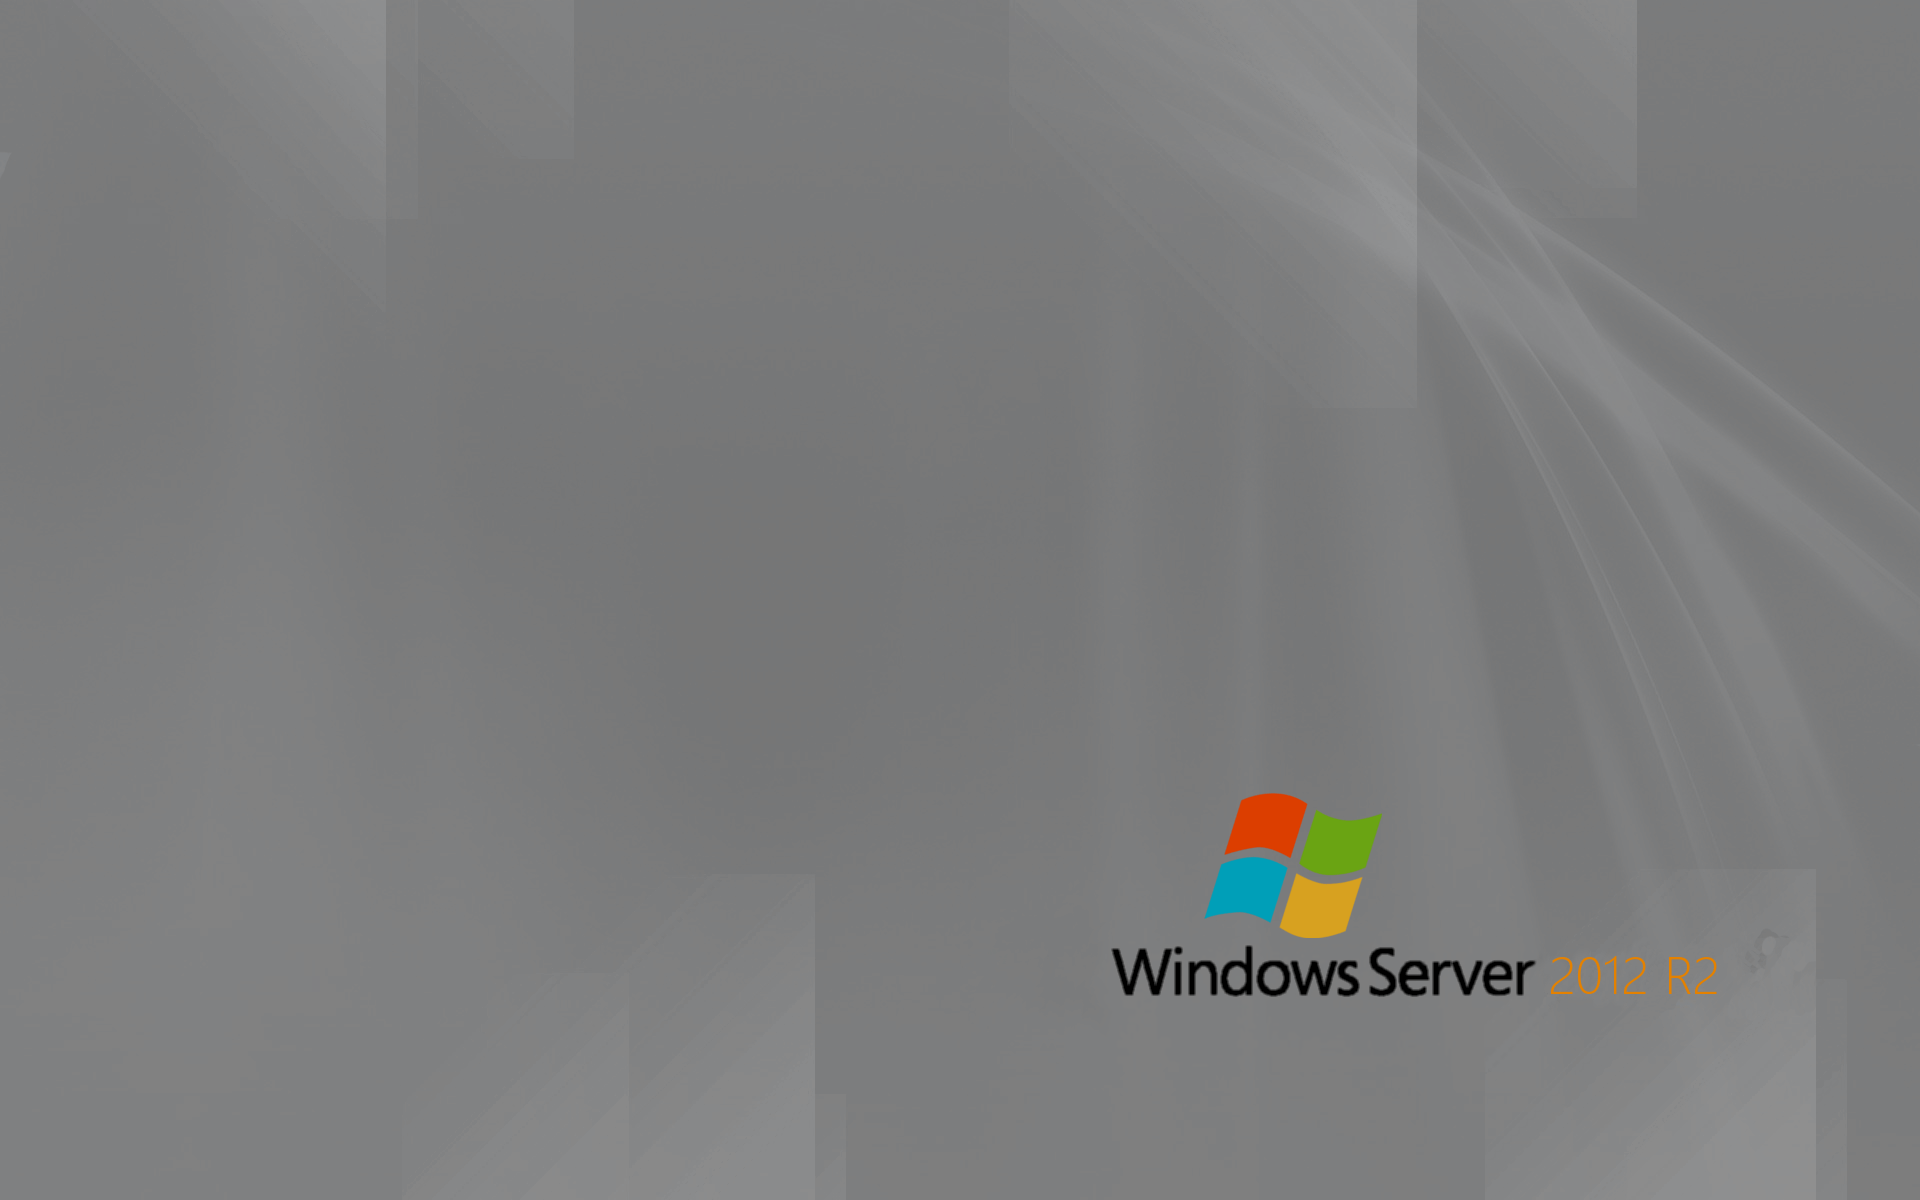 Windows server wallpaper Gallery